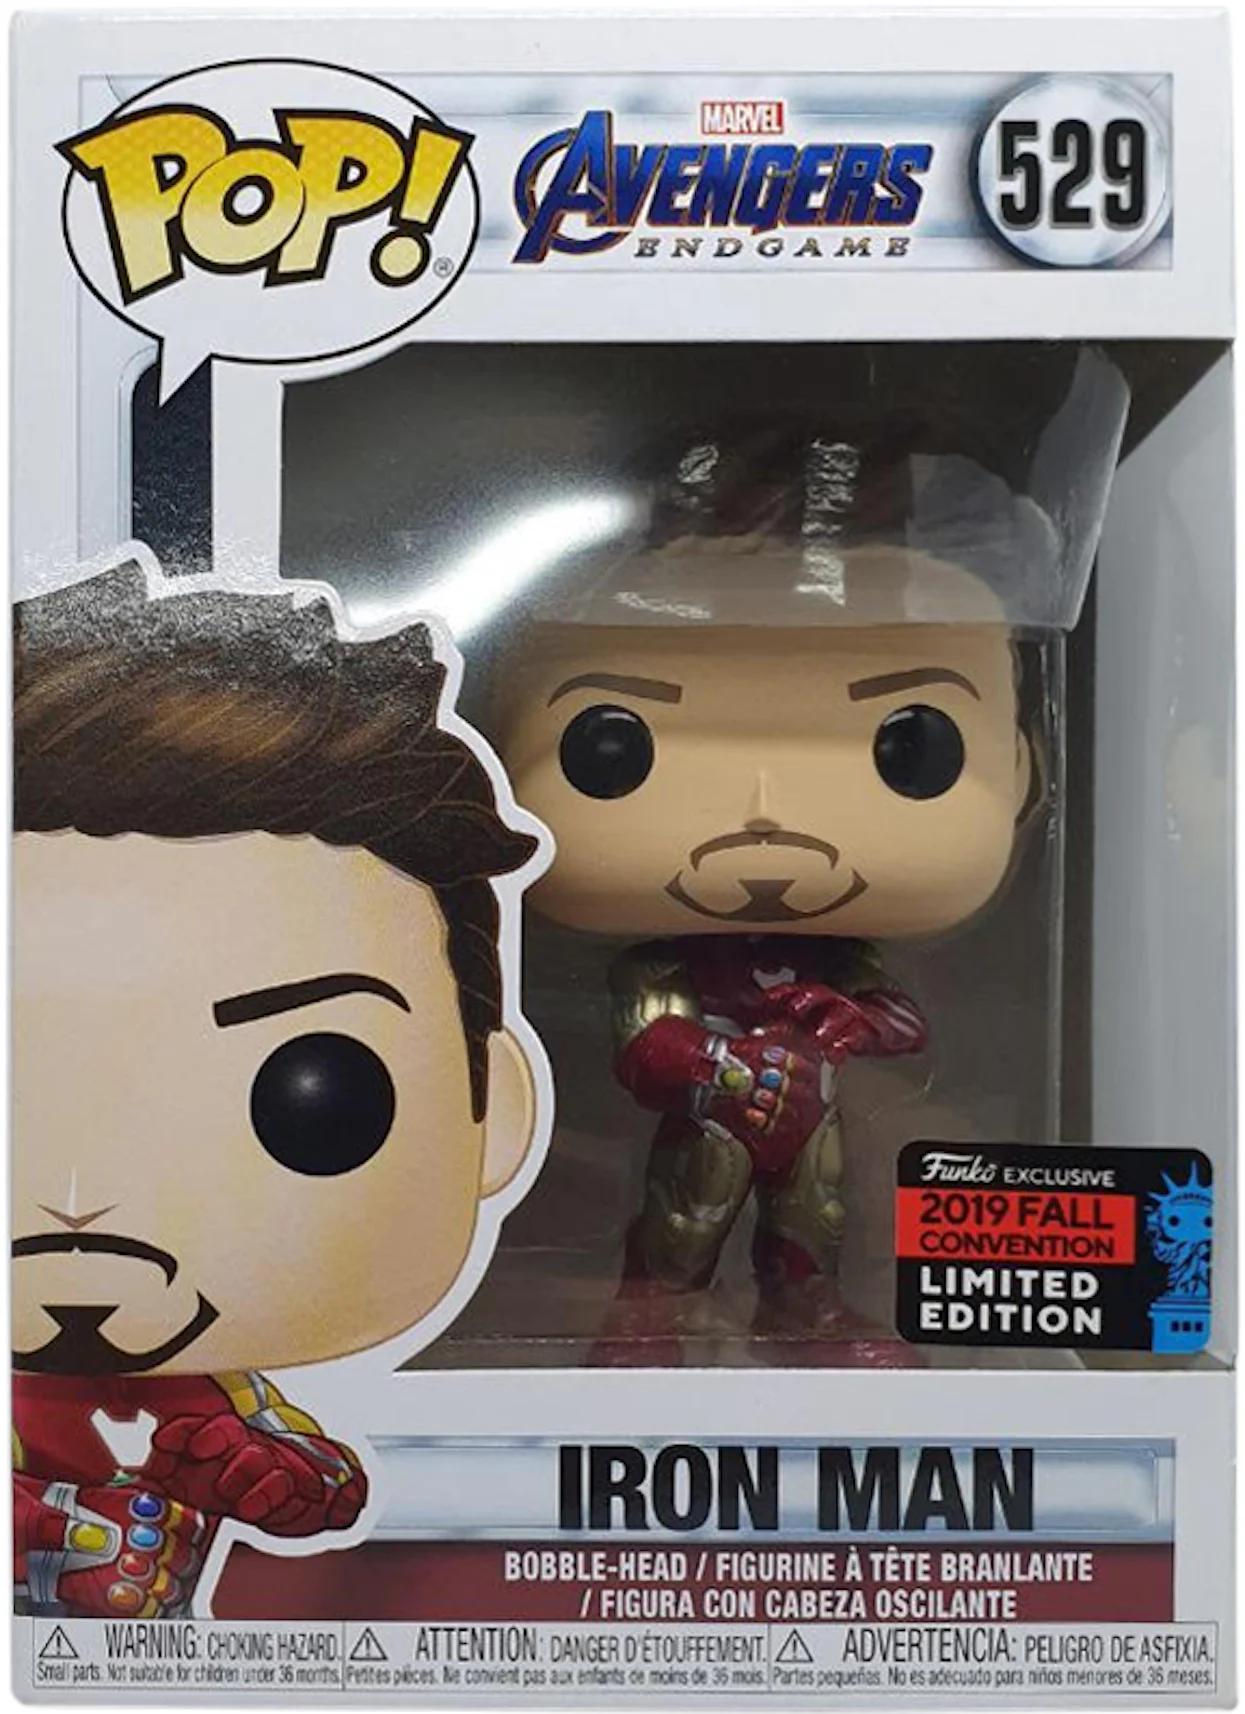 Figura Marvel de Iron Man de 9.5